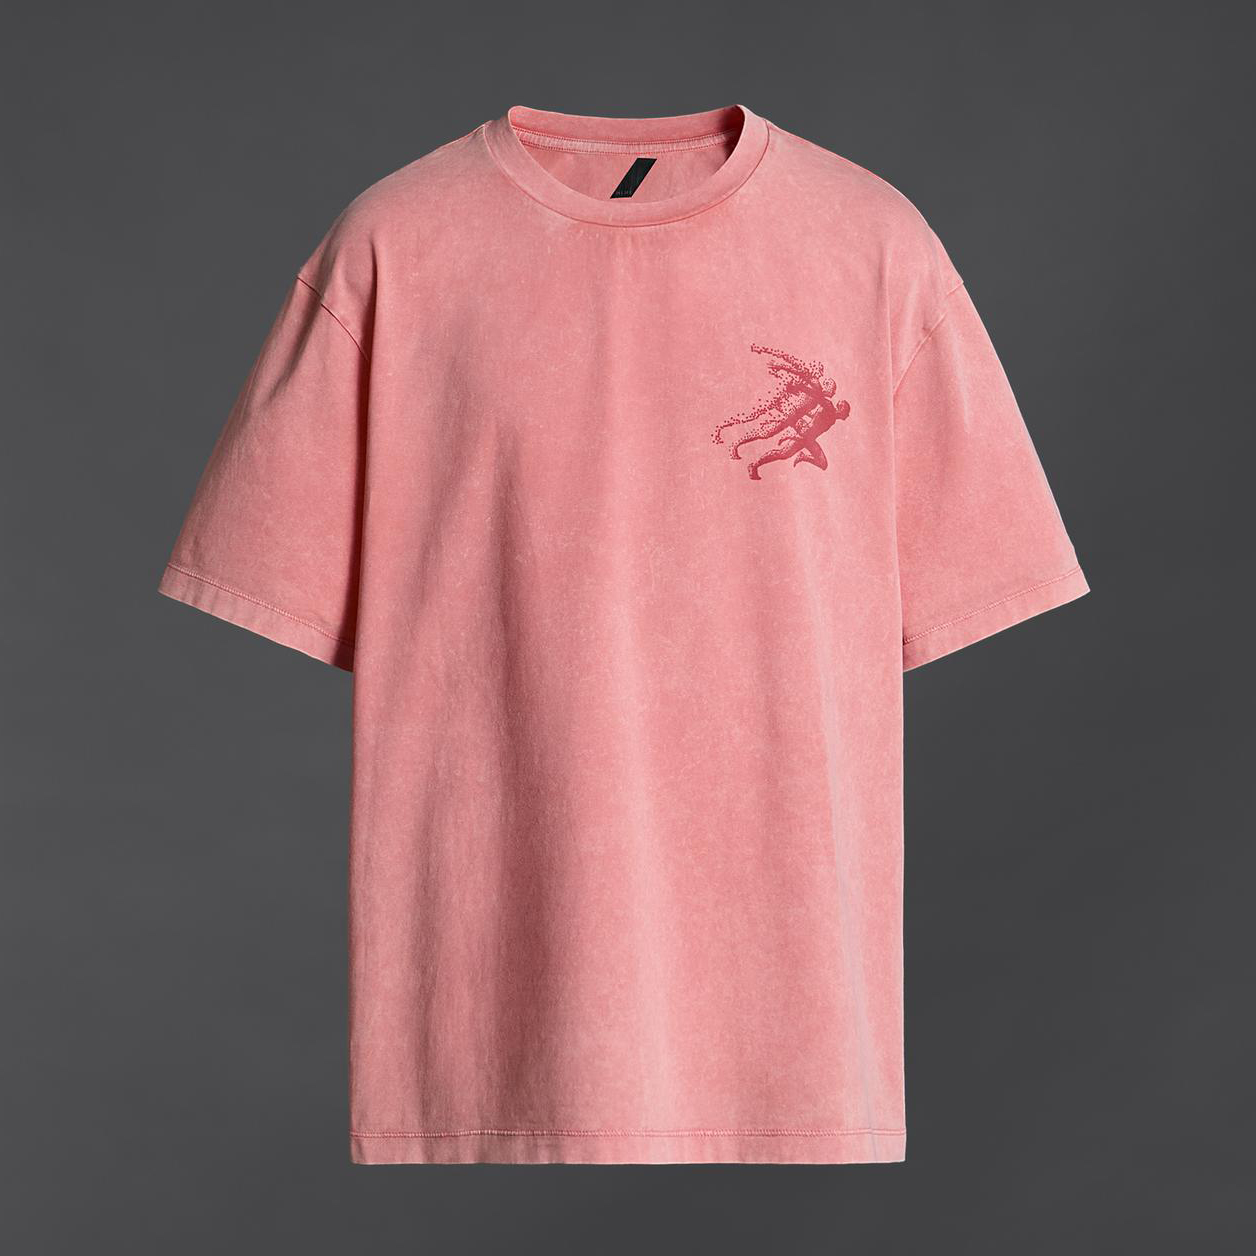 Футболка Zara Printed, розовый футболка zara printed knit черный